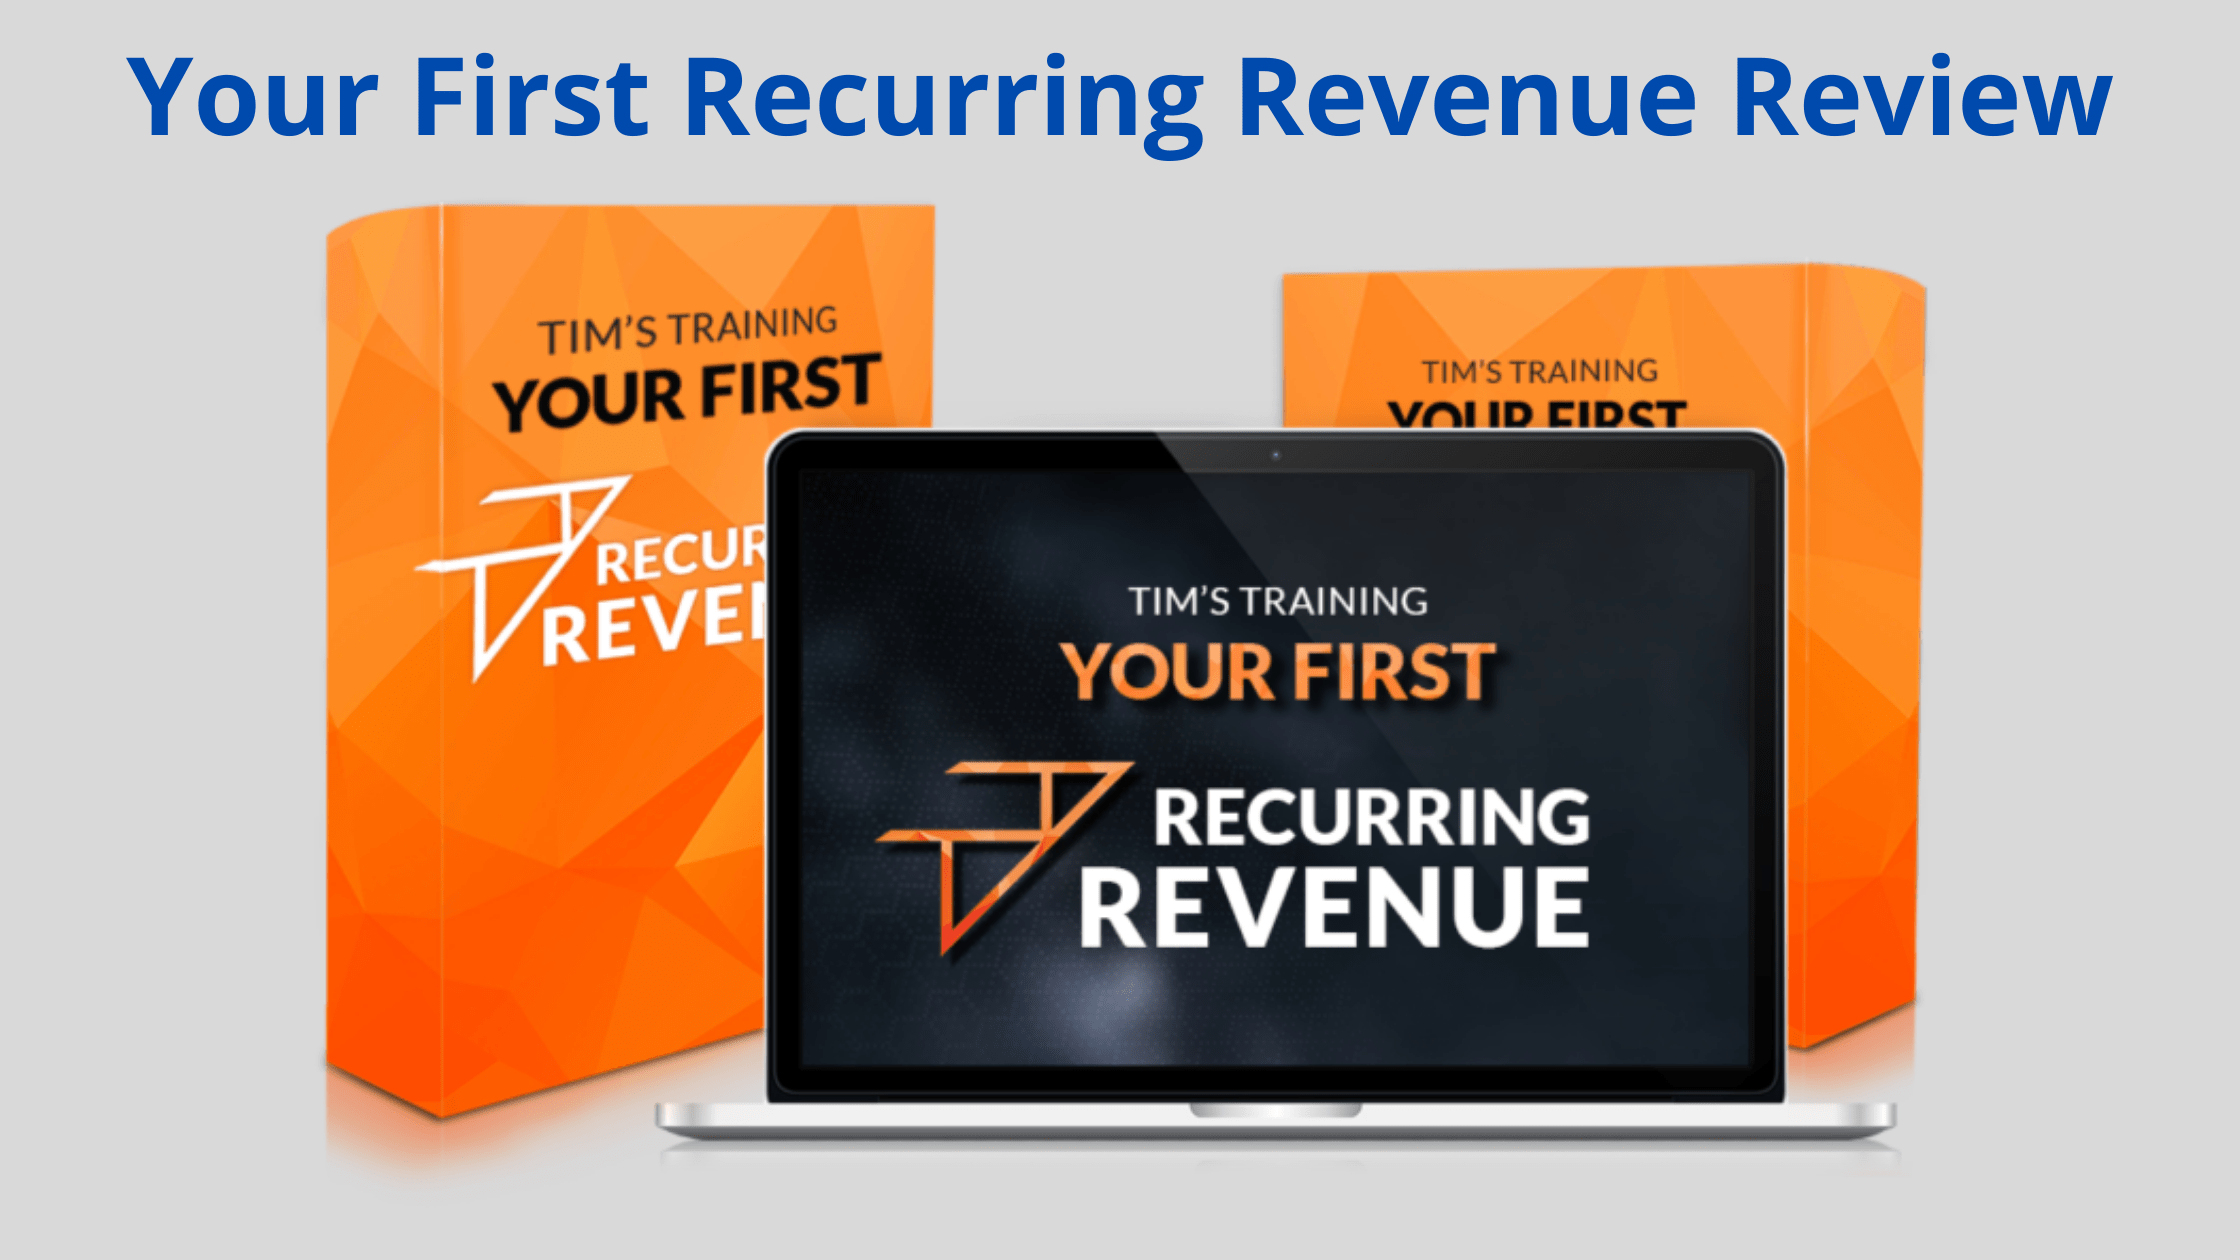 Your First Recurring Revenue Review bonus